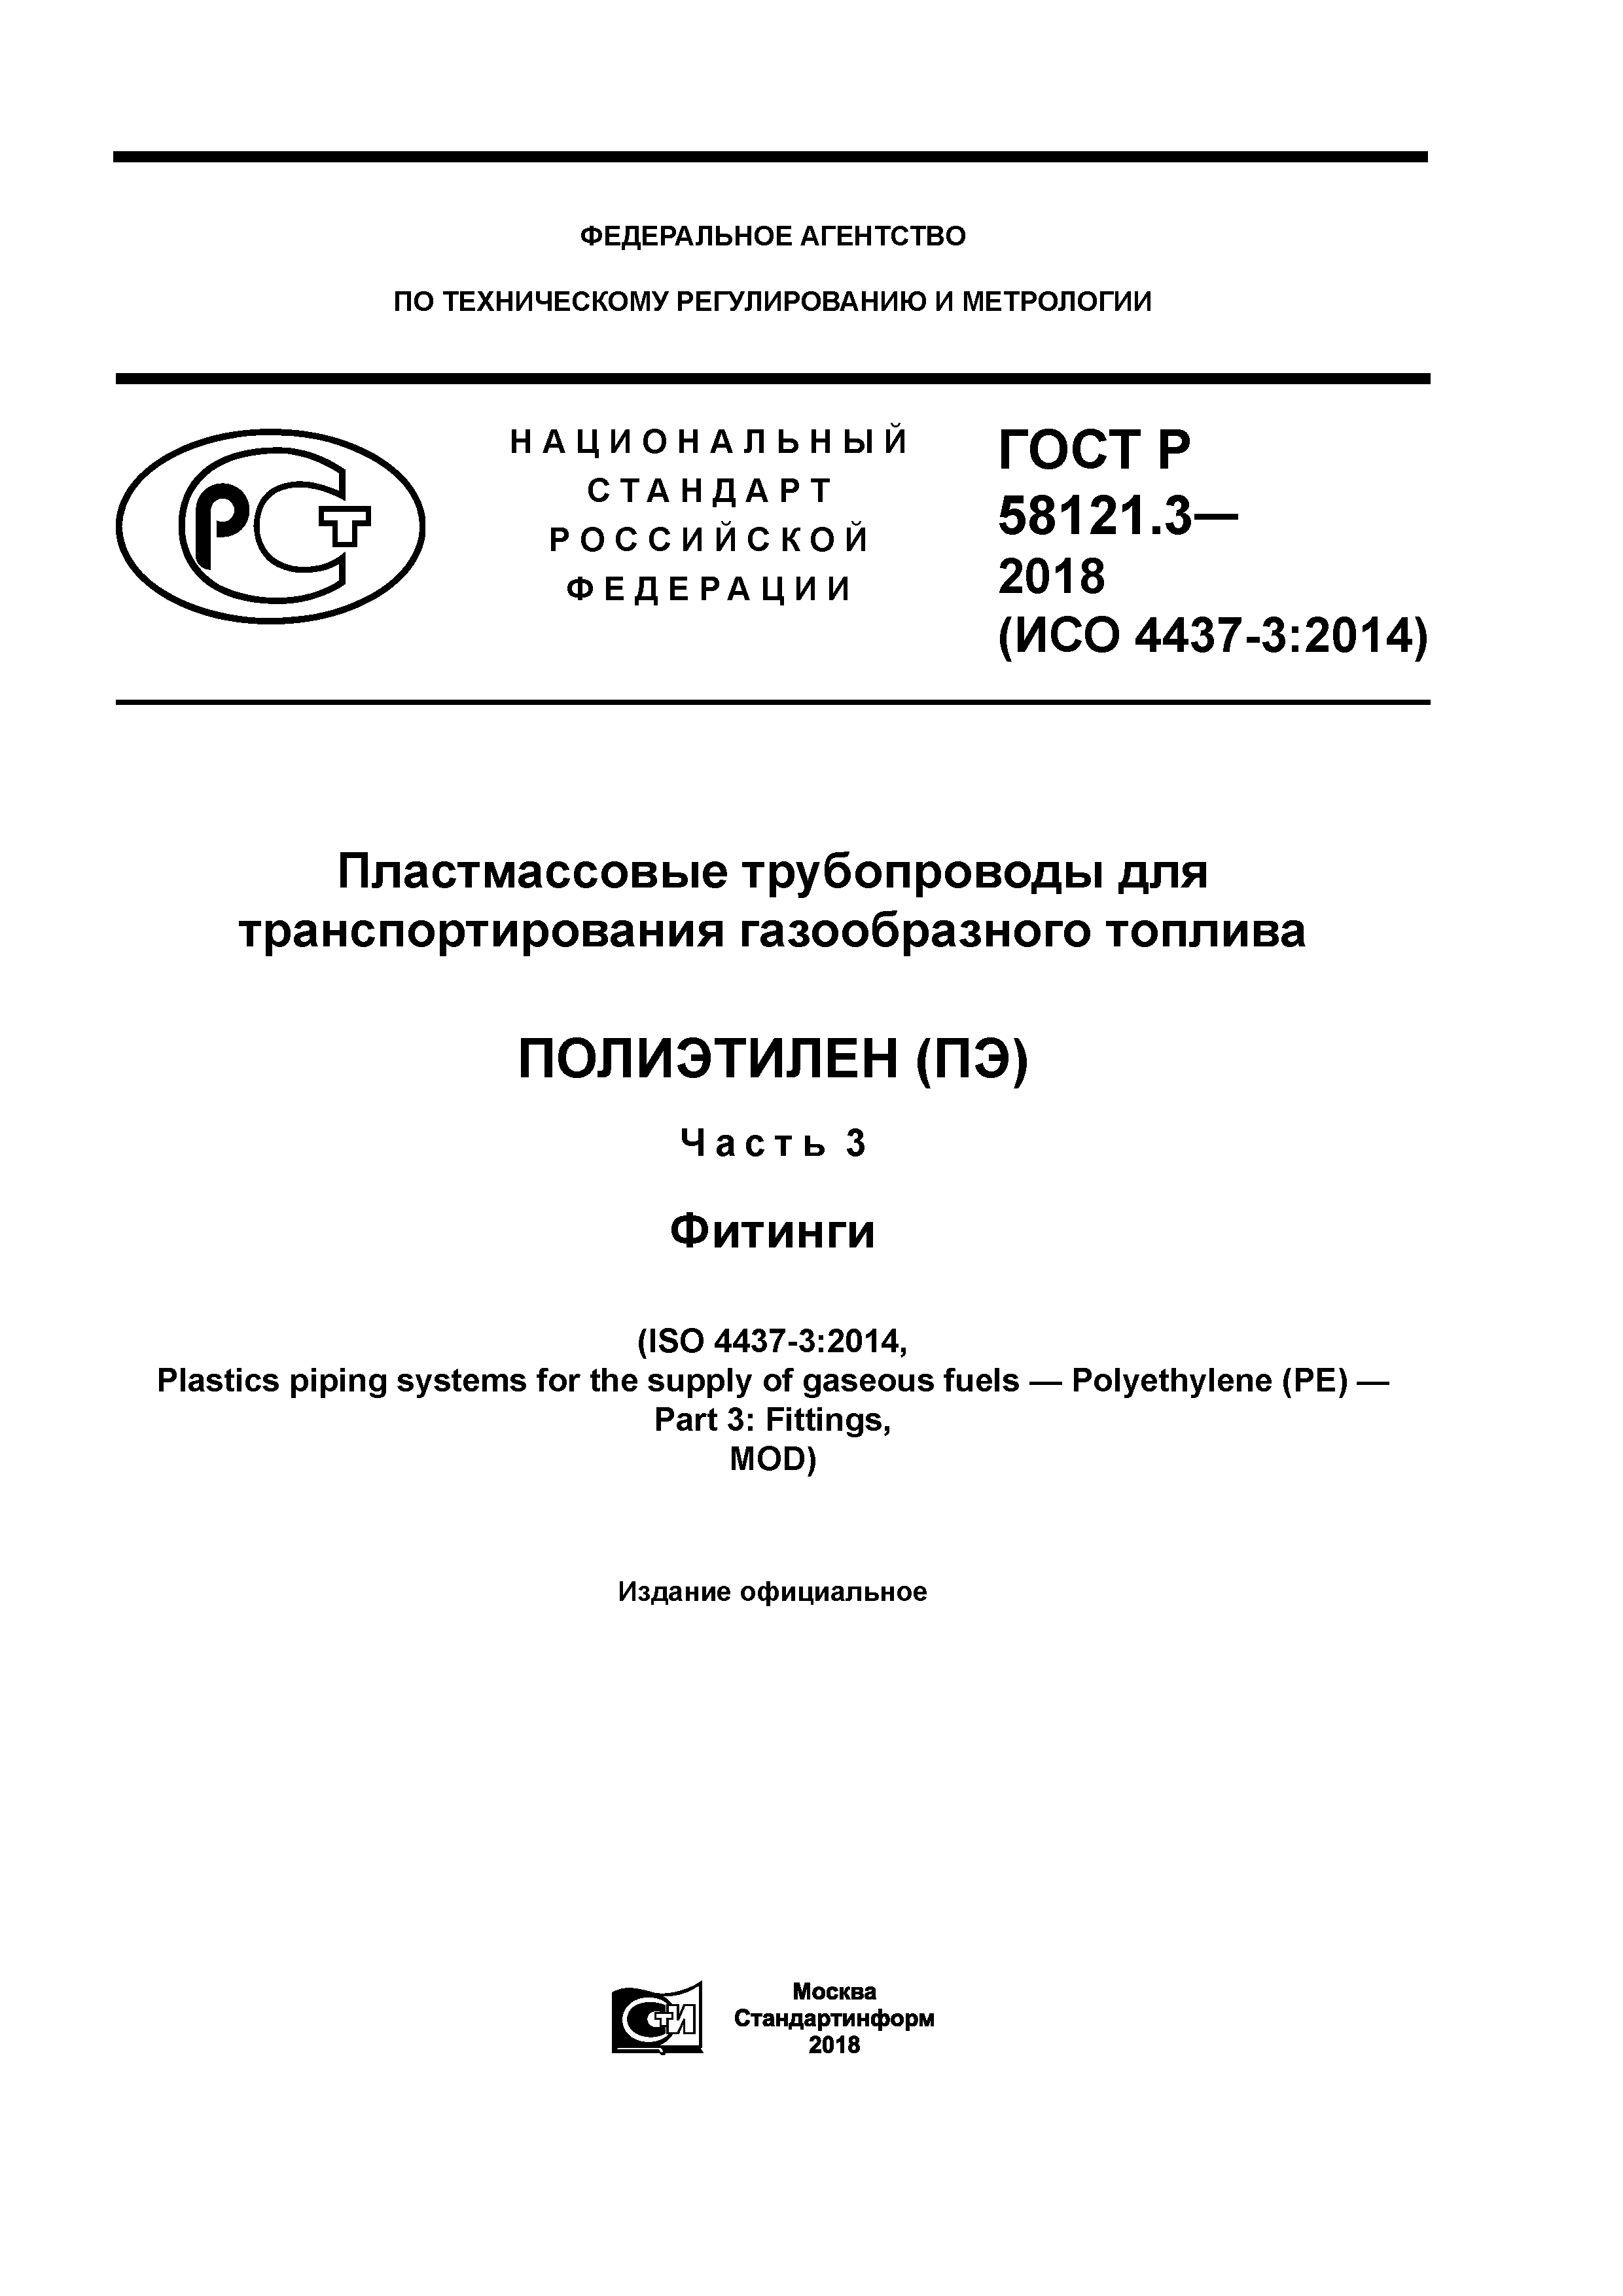 ГОСТ Р 58121.3-2018